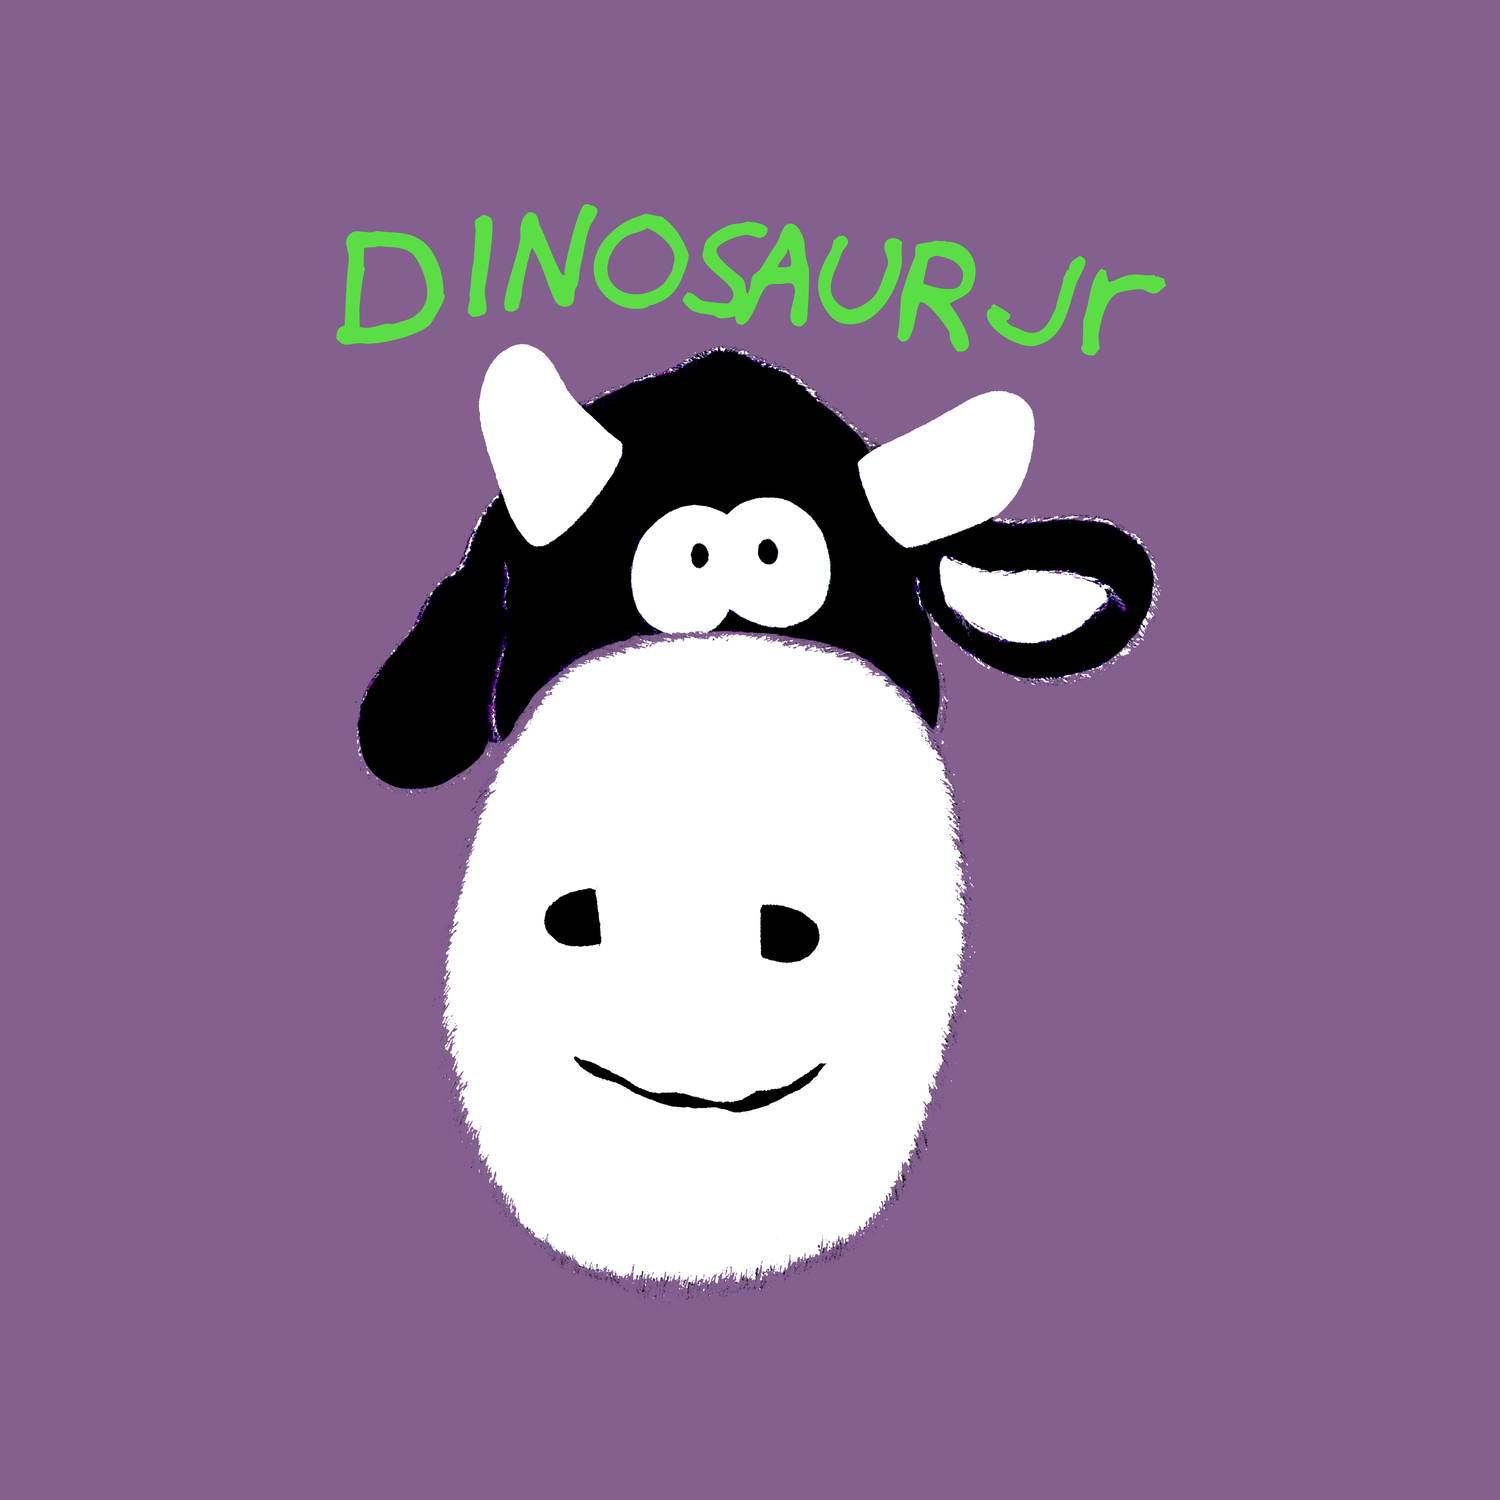 (c) Dinosaurjr.com